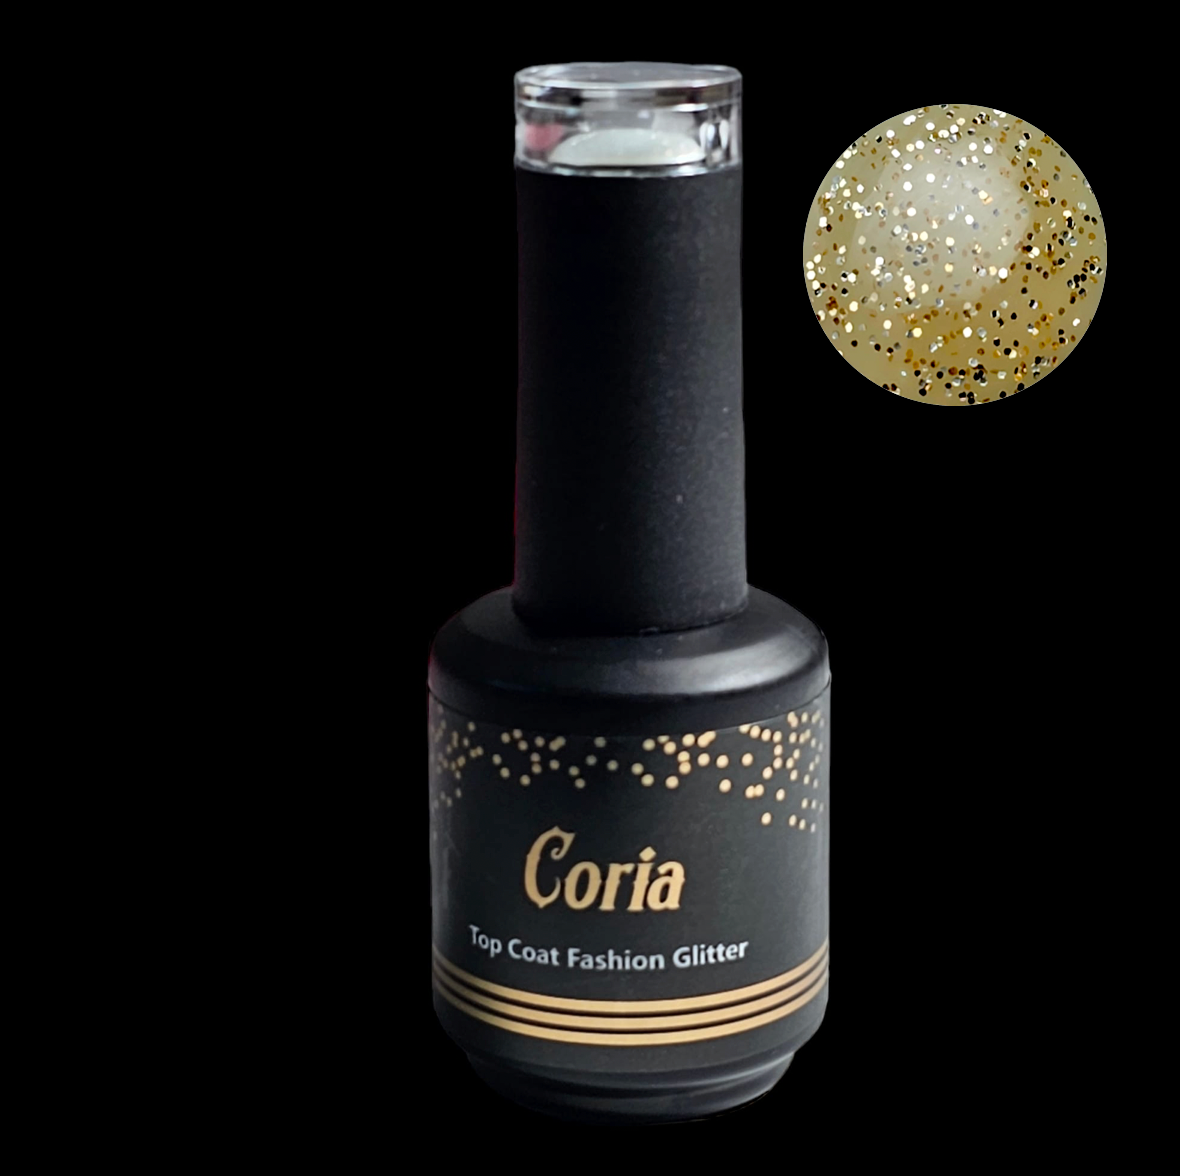 Top Coat Fashion Glitter Coria 15 ml 103